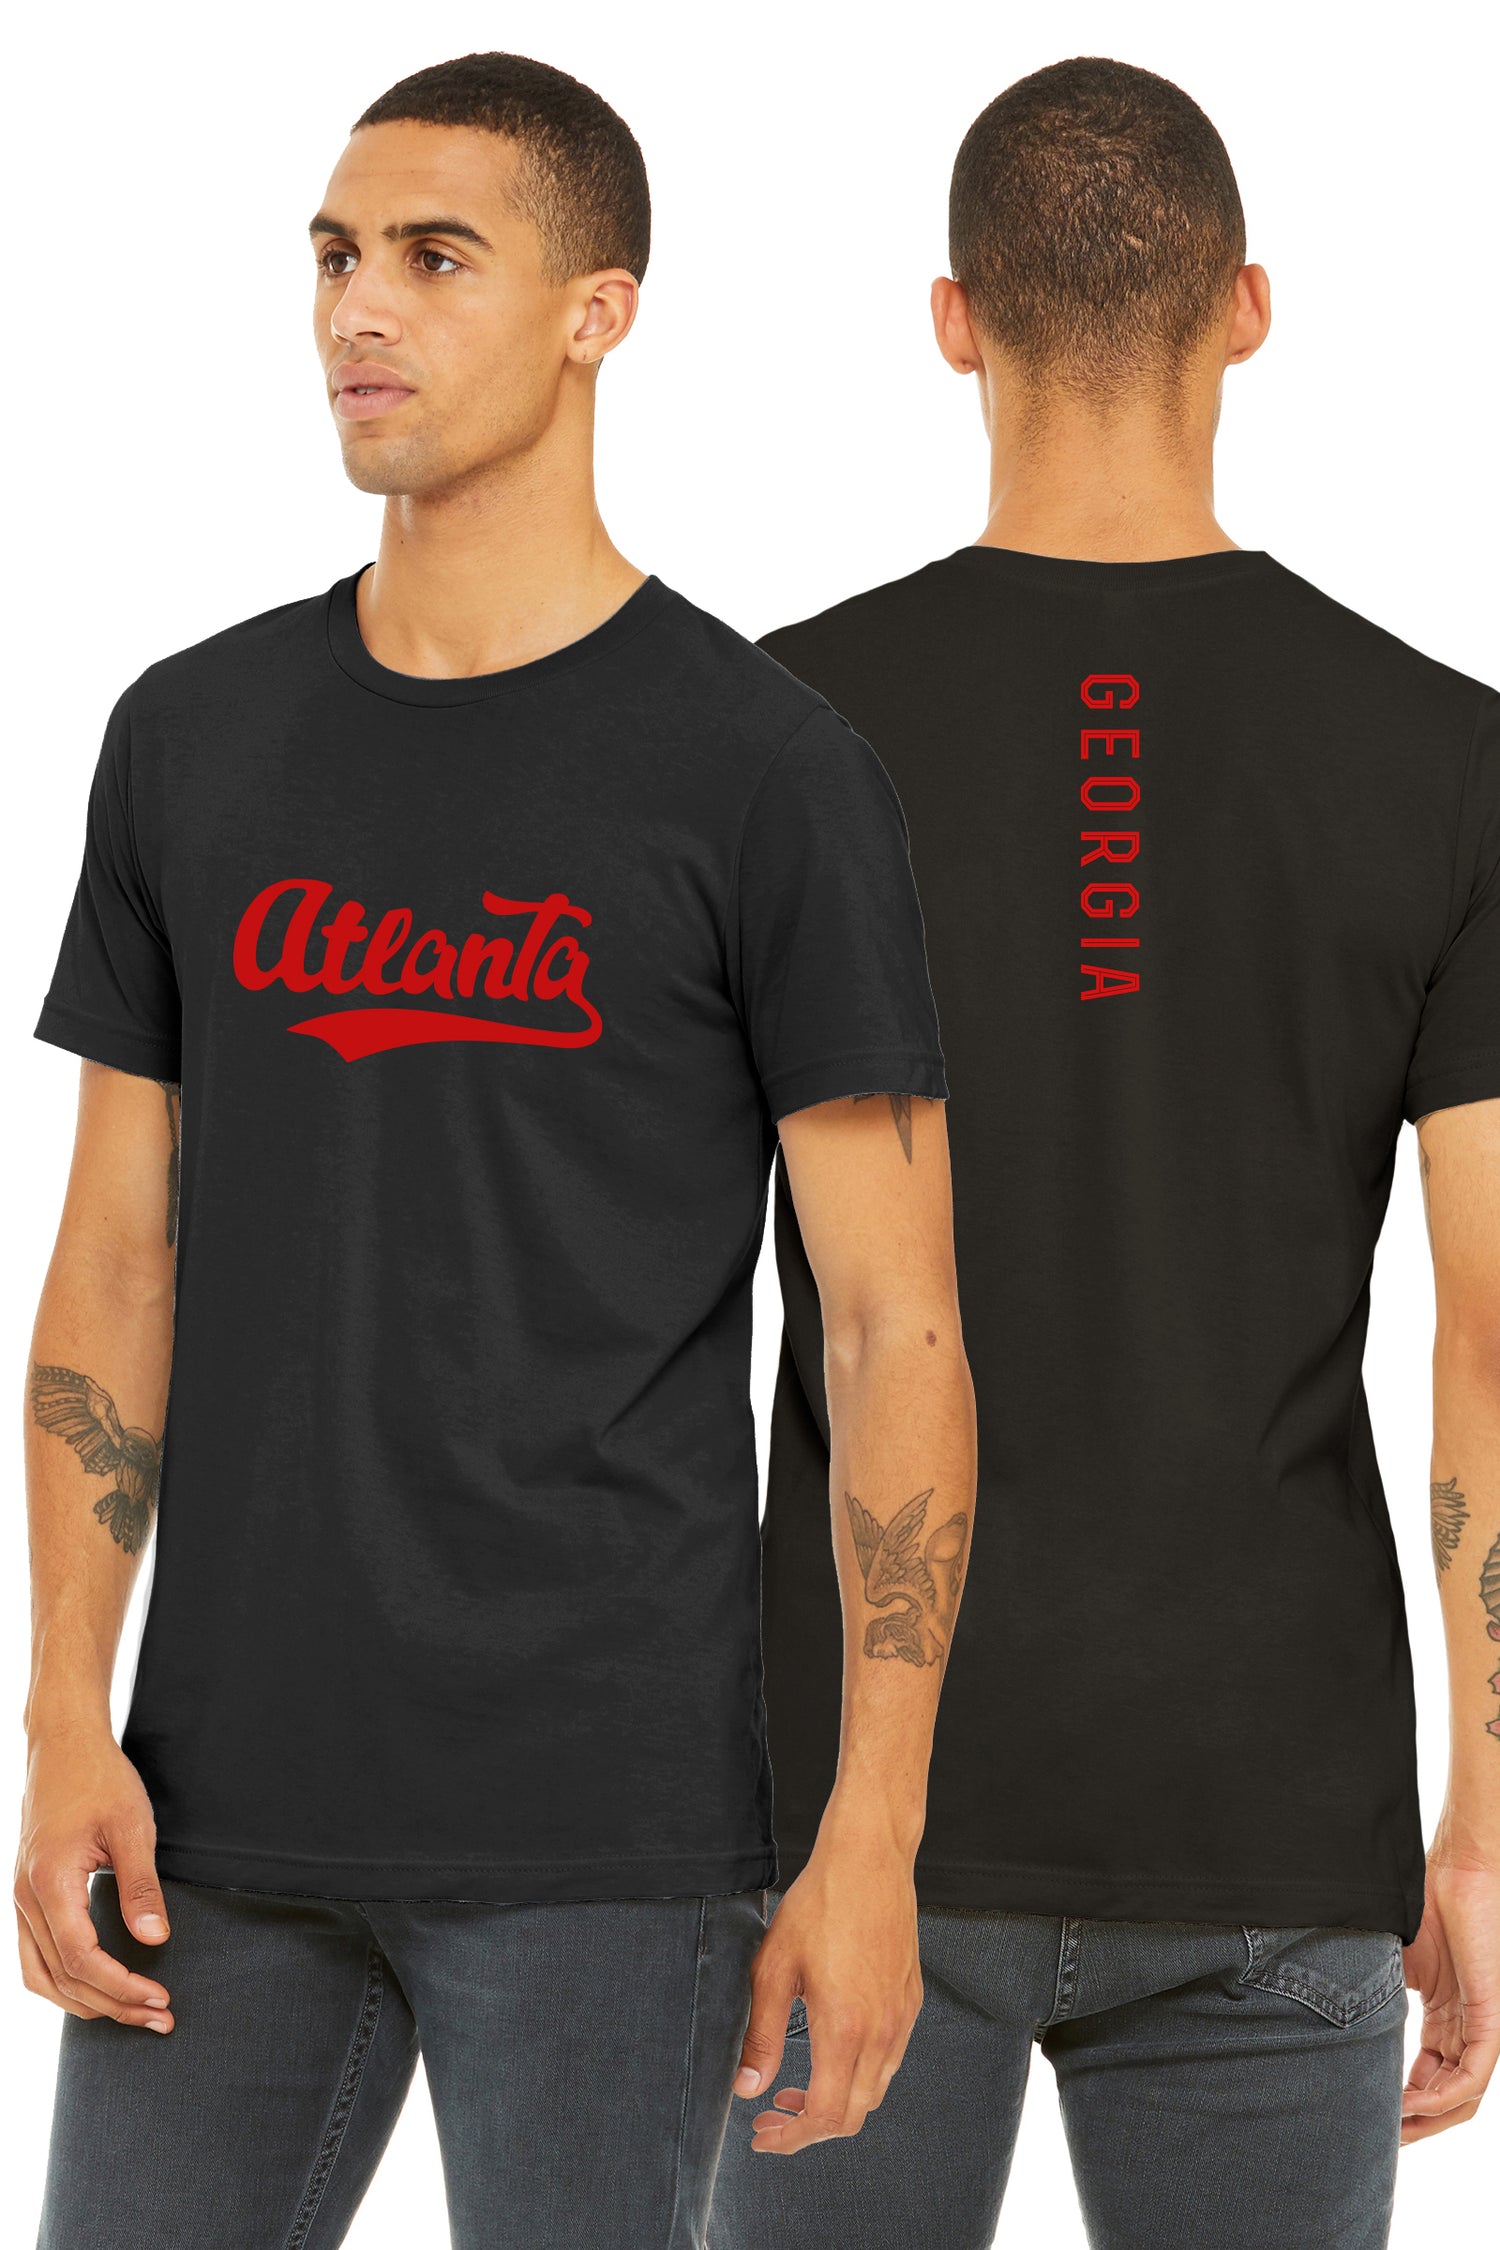 Atlanta Clothing